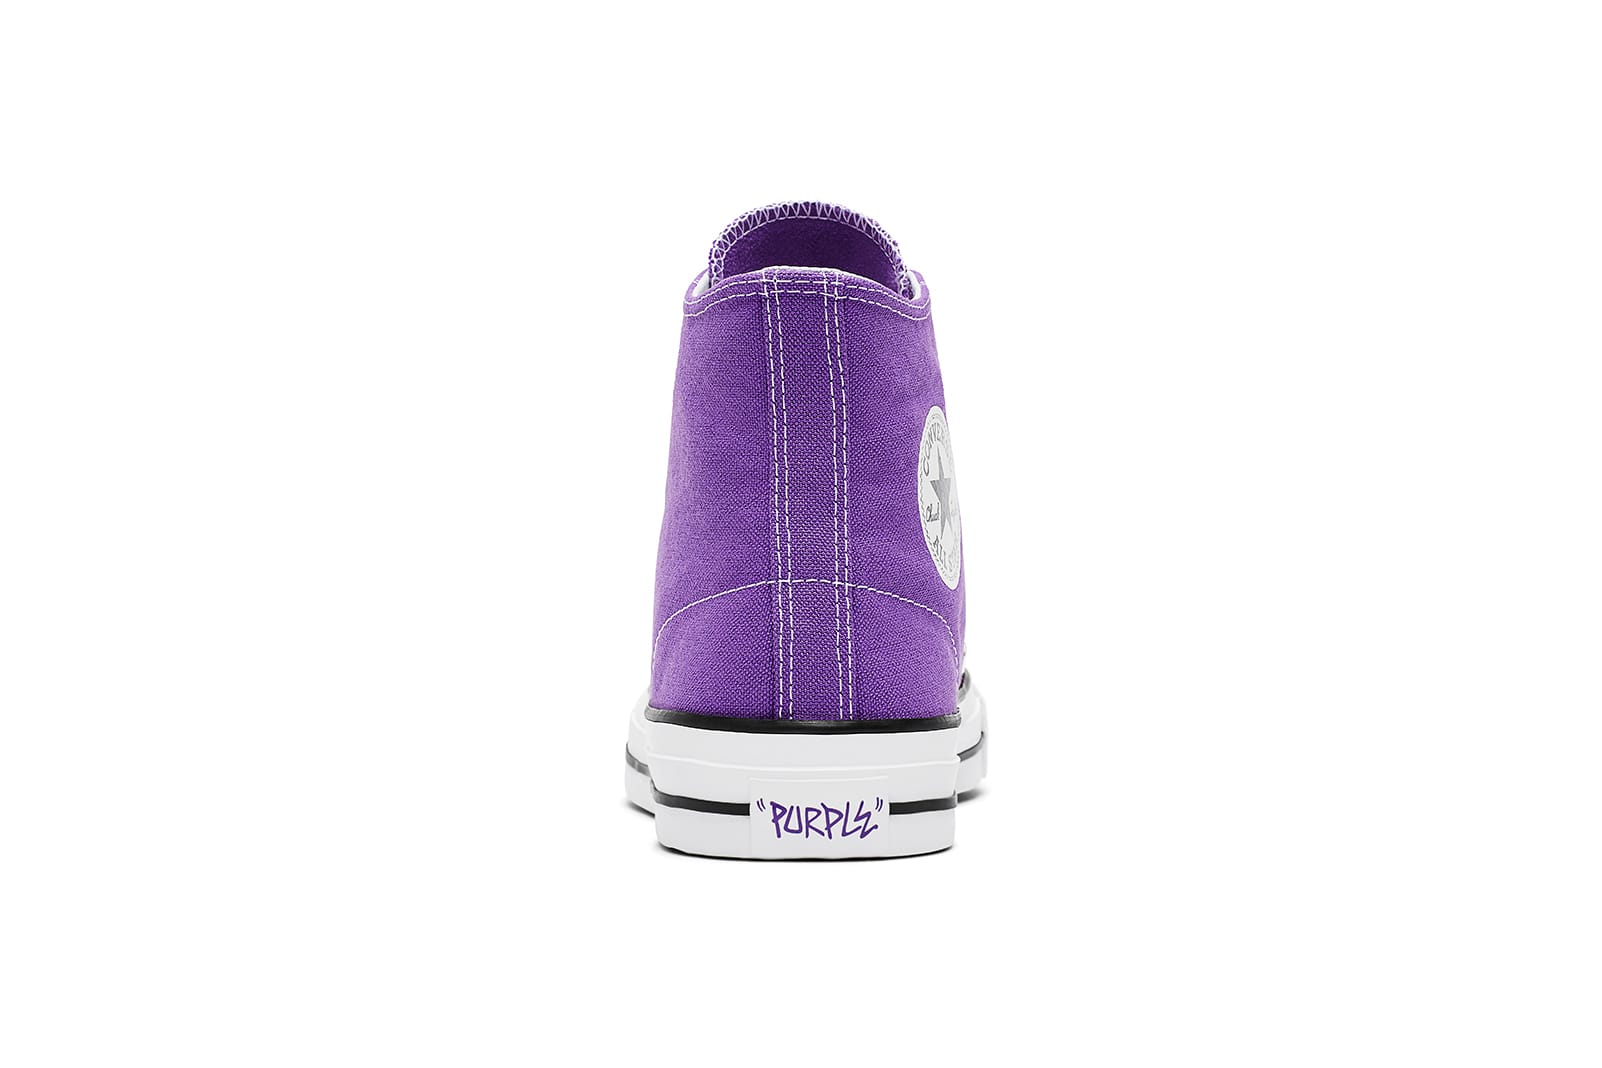 converse purple film